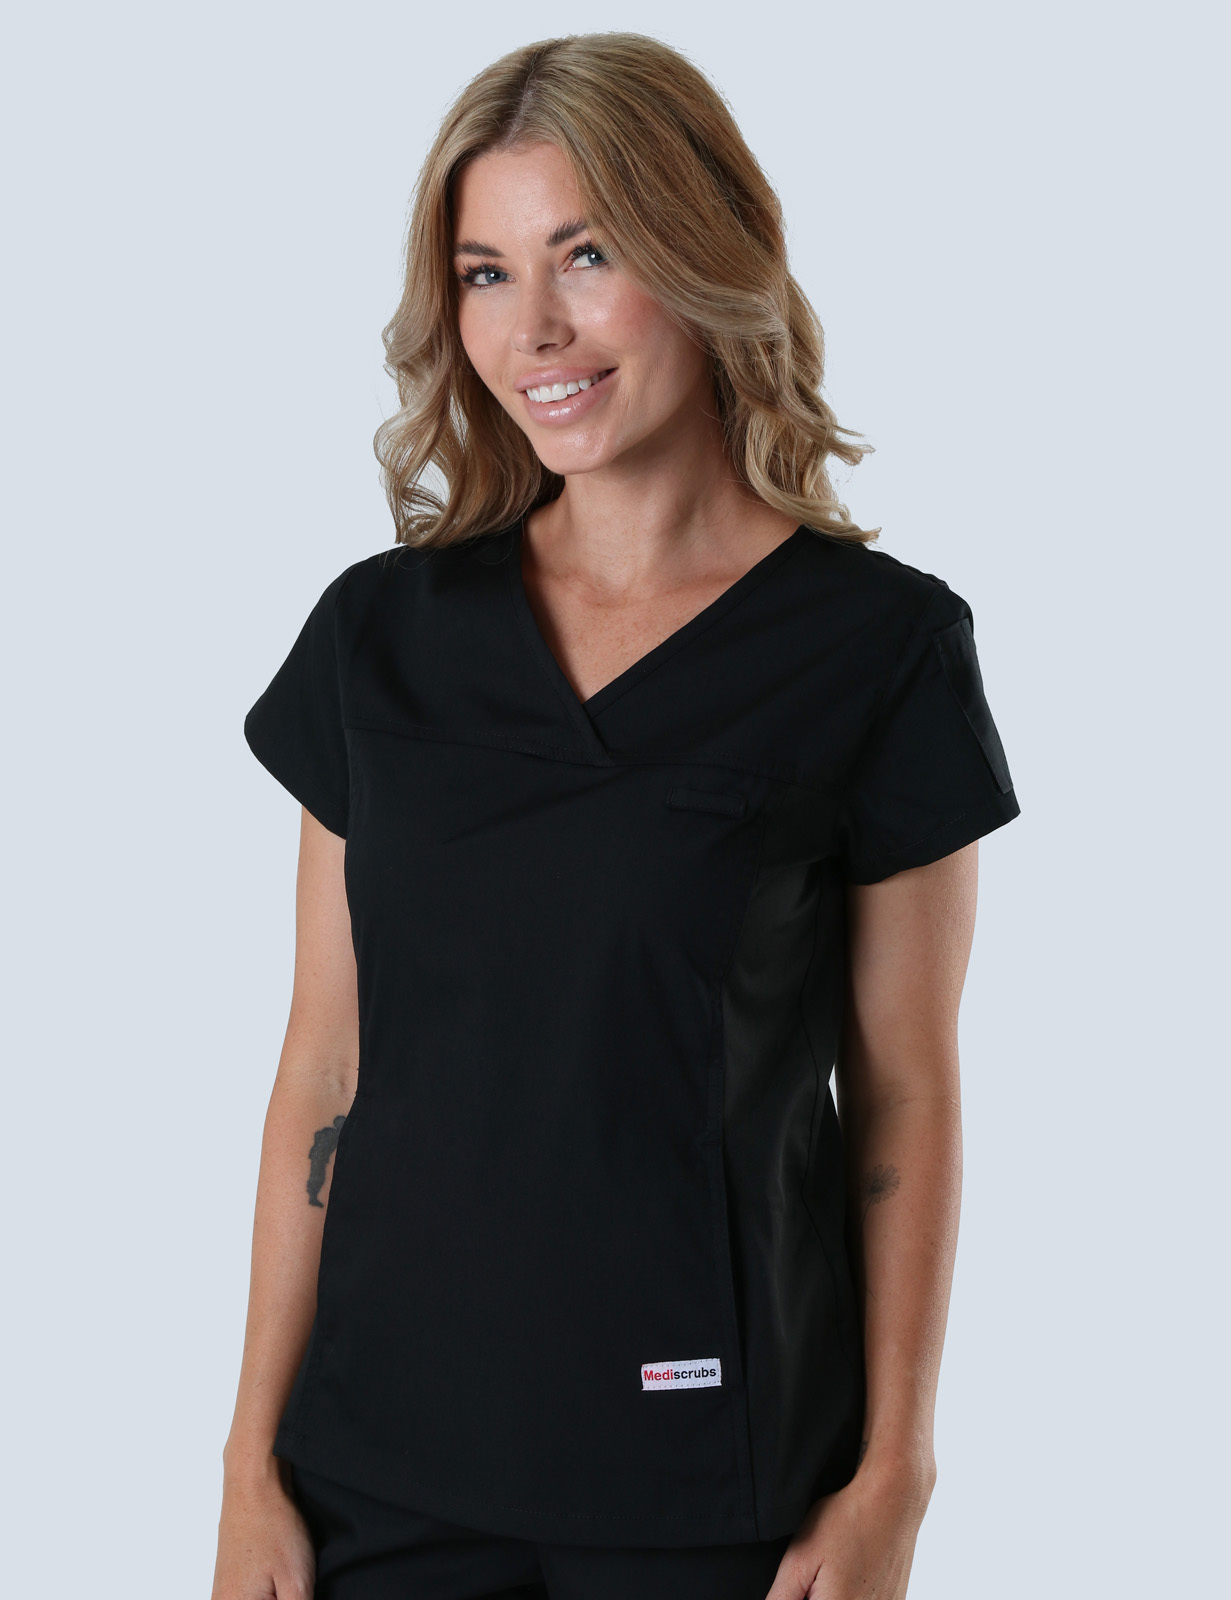 Canberra Hospital Medical Imaging Doctor Uniform Top Only Bundle ( Women's Fit Spandex Top in Black + Logos)